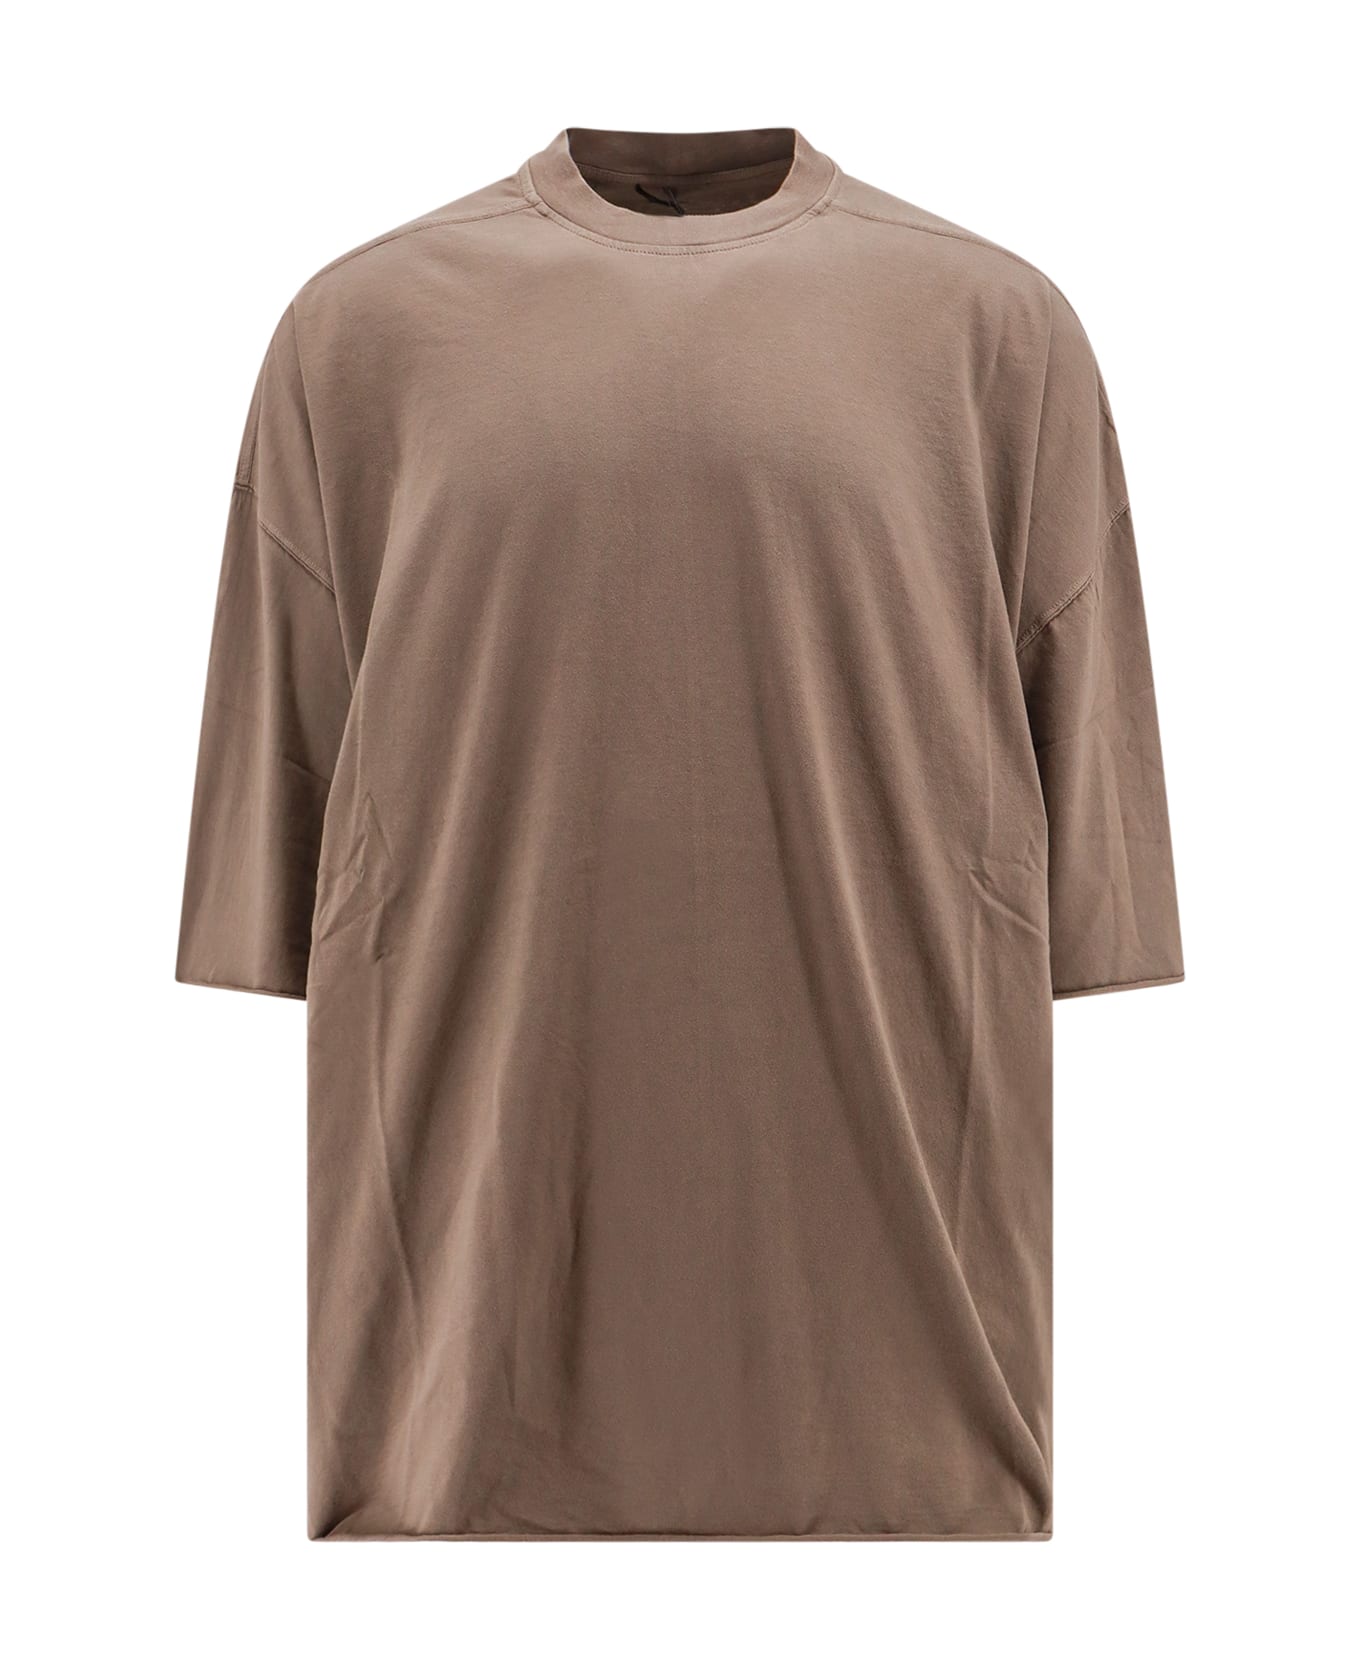 DRKSHDW T-shirt - Brown